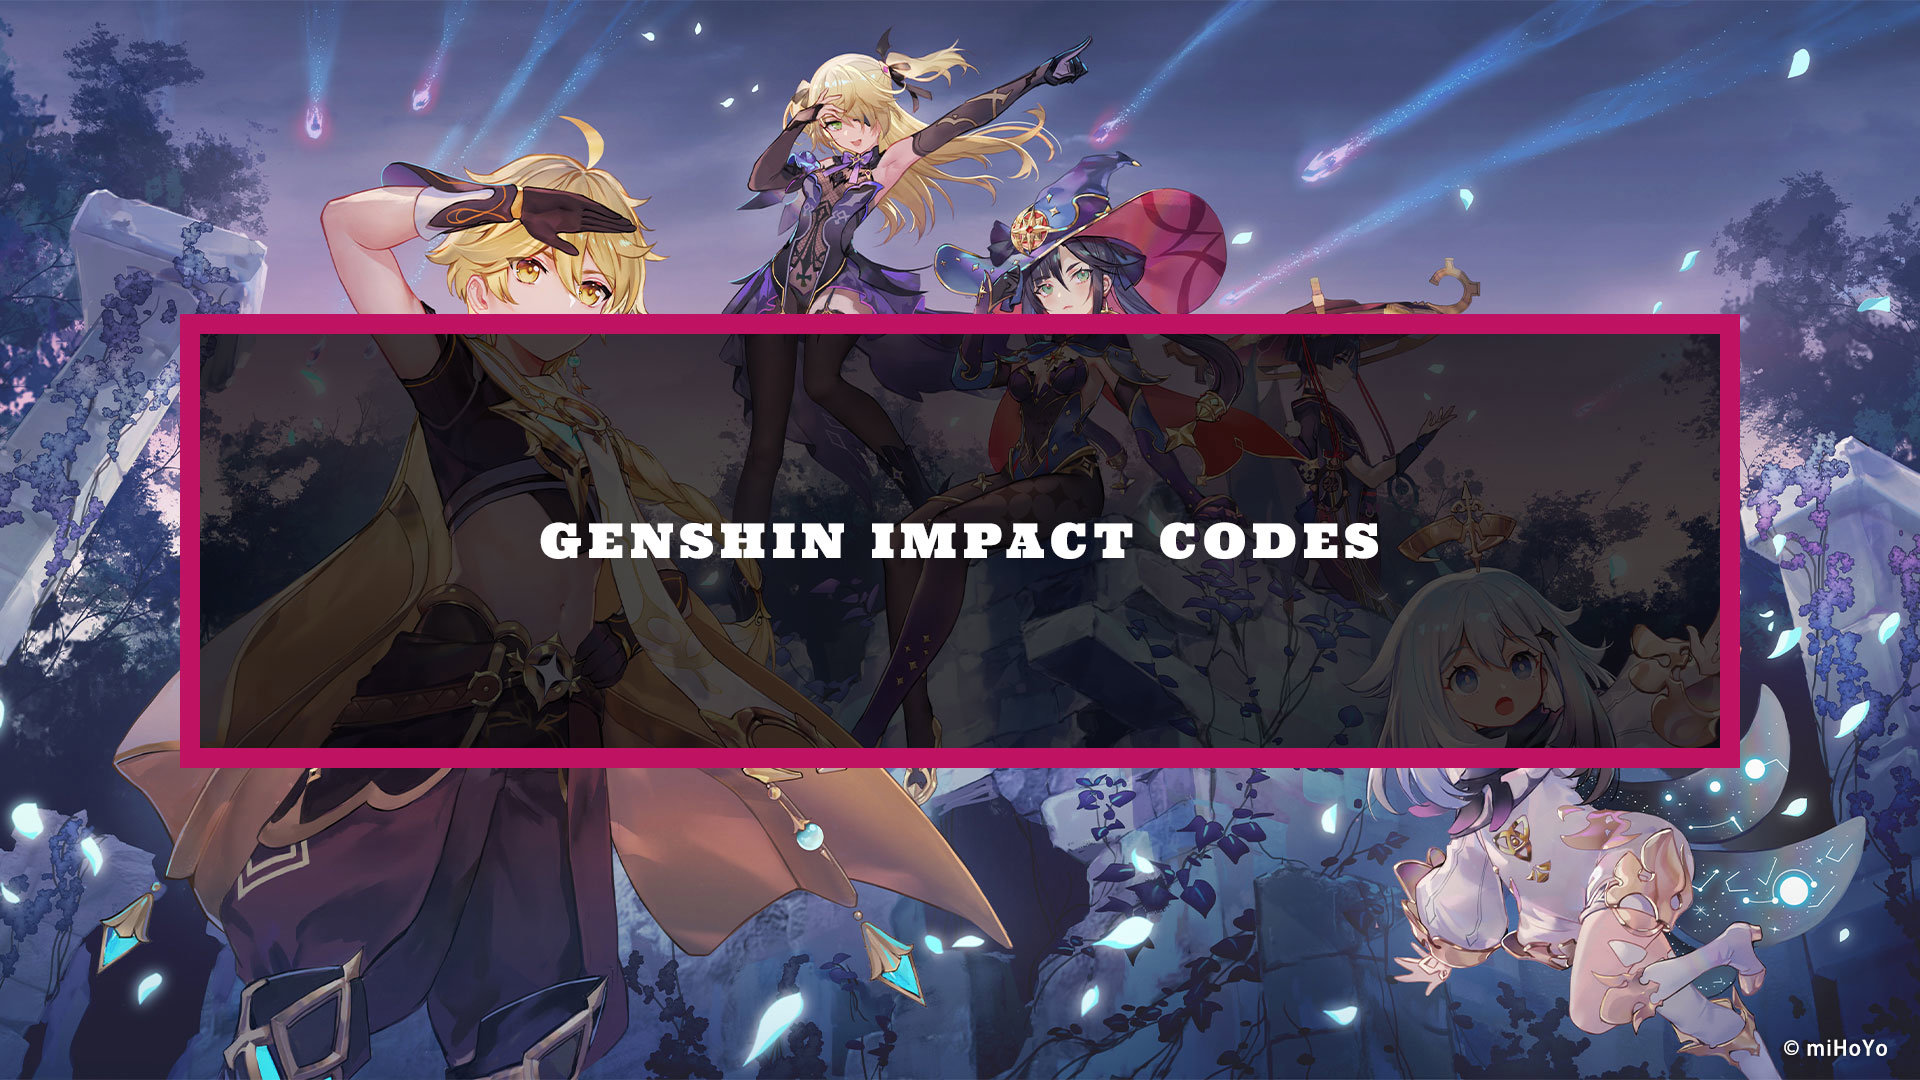 Genshin Impact 3.4 redeem codes for January 2023